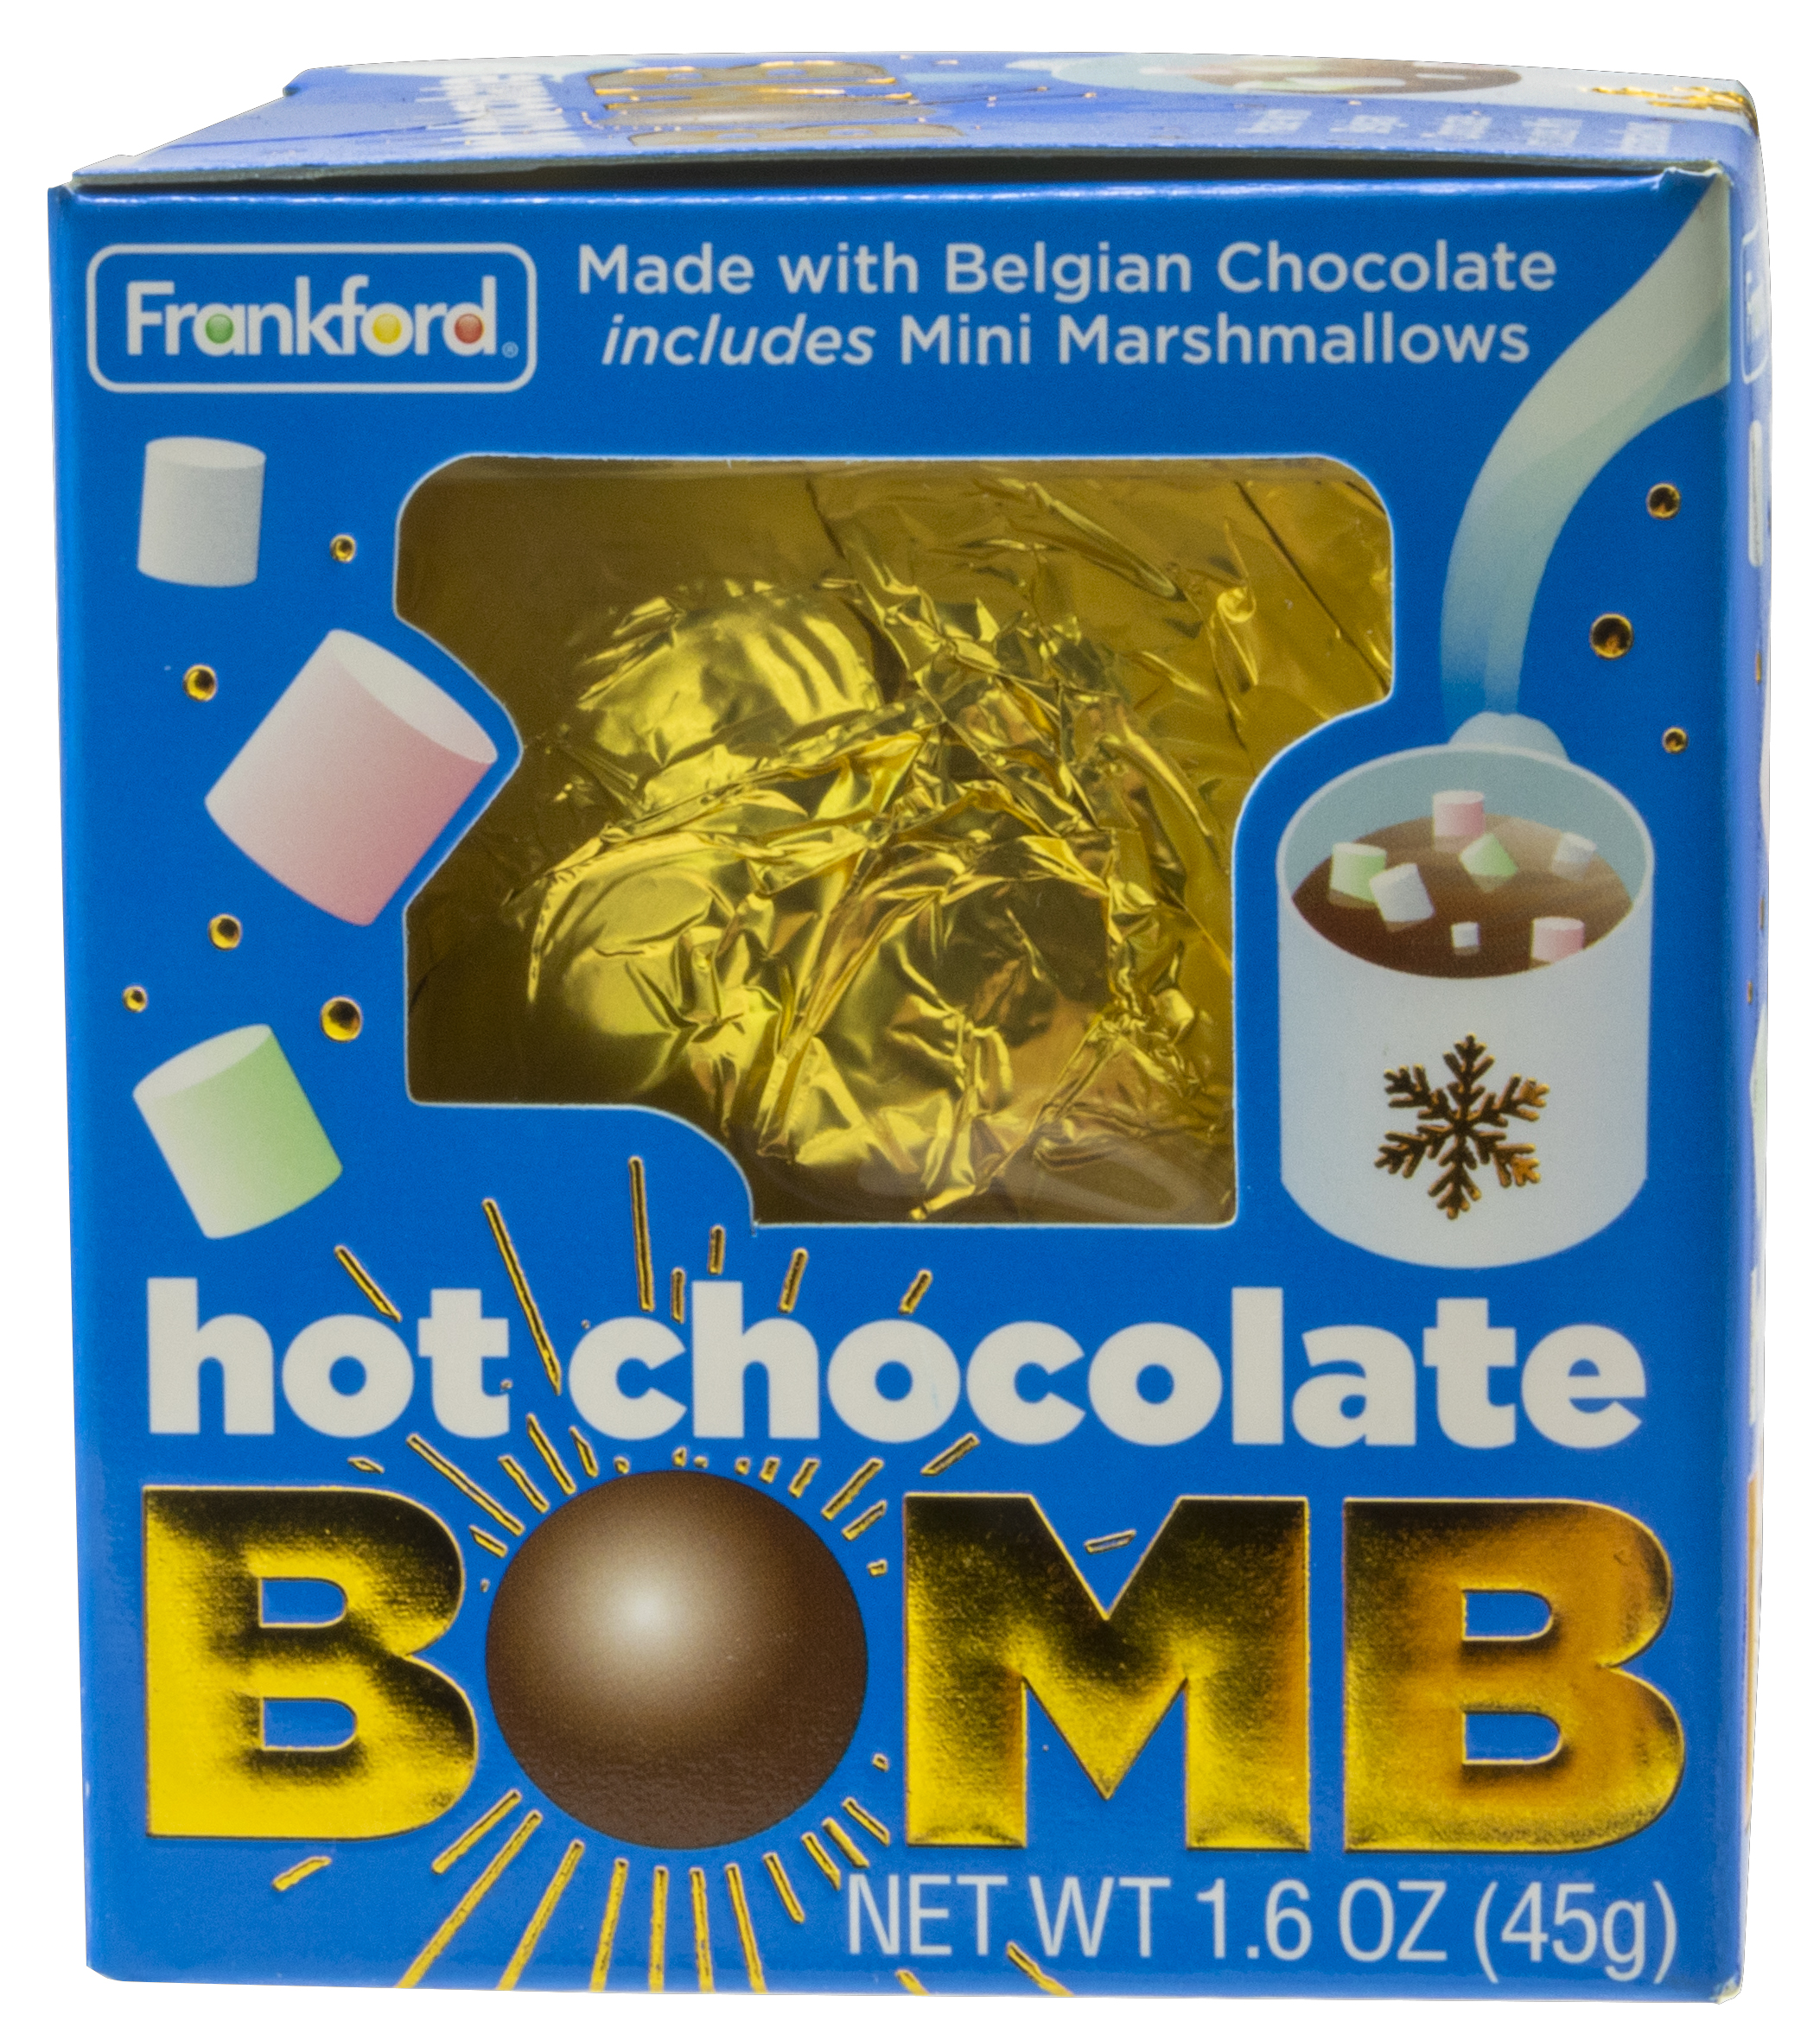 Frankford Original Belgian Milk Chocolate Hot Chocolate Bomb, 1.6 oz - image 1 of 5